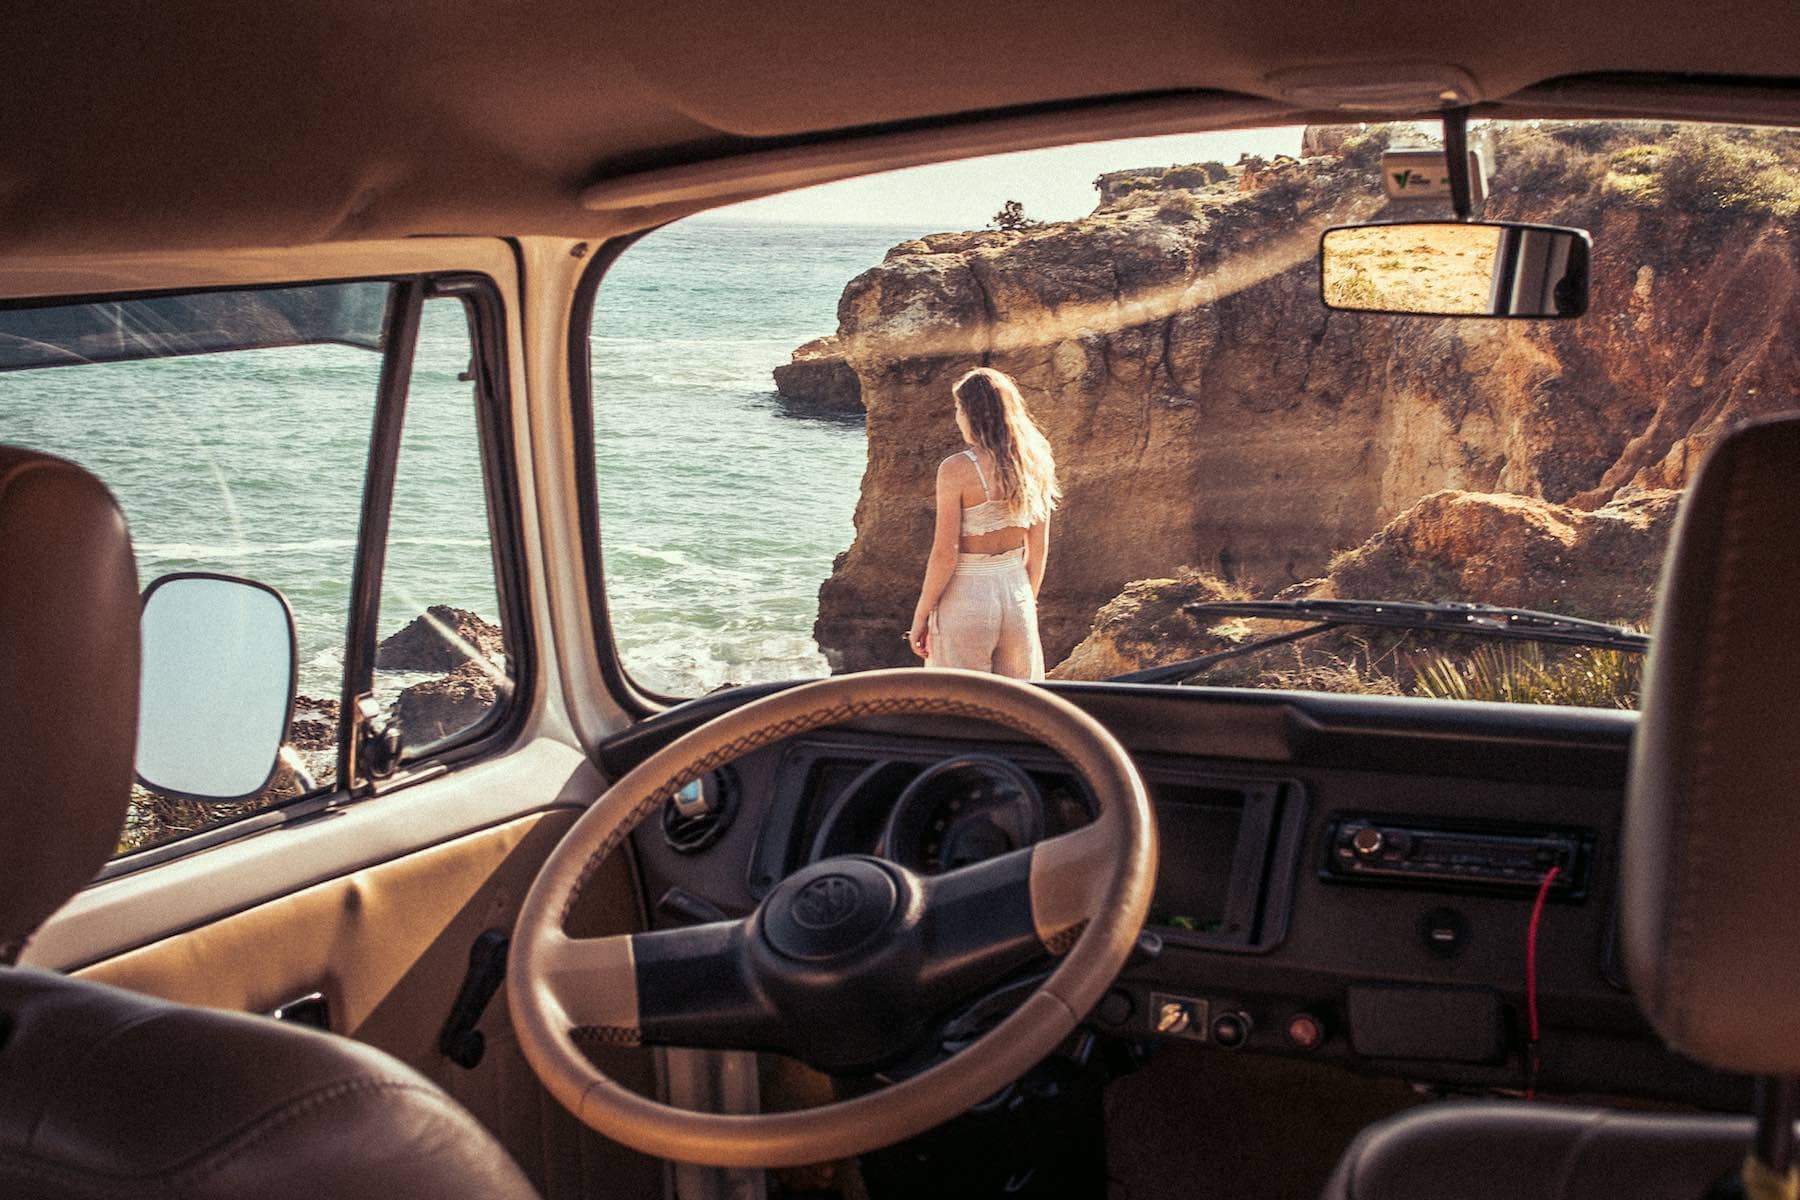 Rent a camper van for a road trip in Portugal